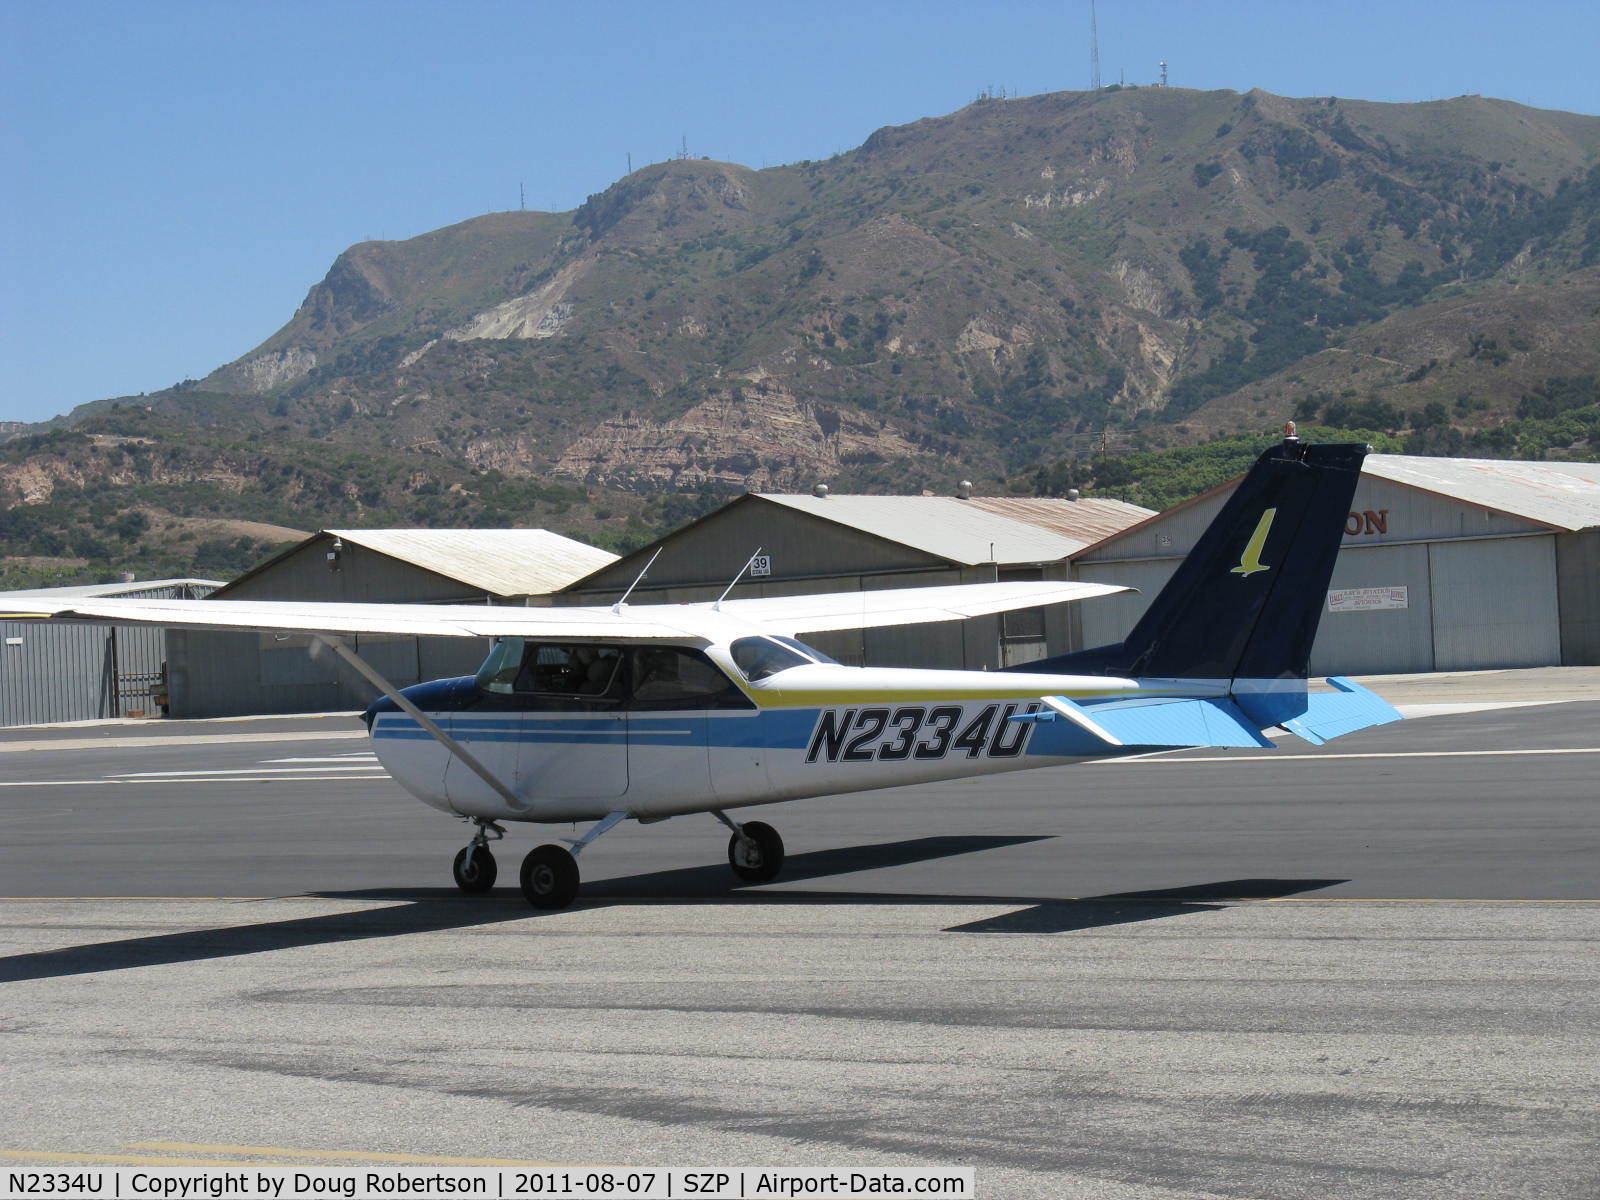 N2334U, 1962 Cessna 172D C/N 17249934, 1962 Cessna 172D SKYHAWK, Continental O-300 145 Hp 6 cylinder, taxi